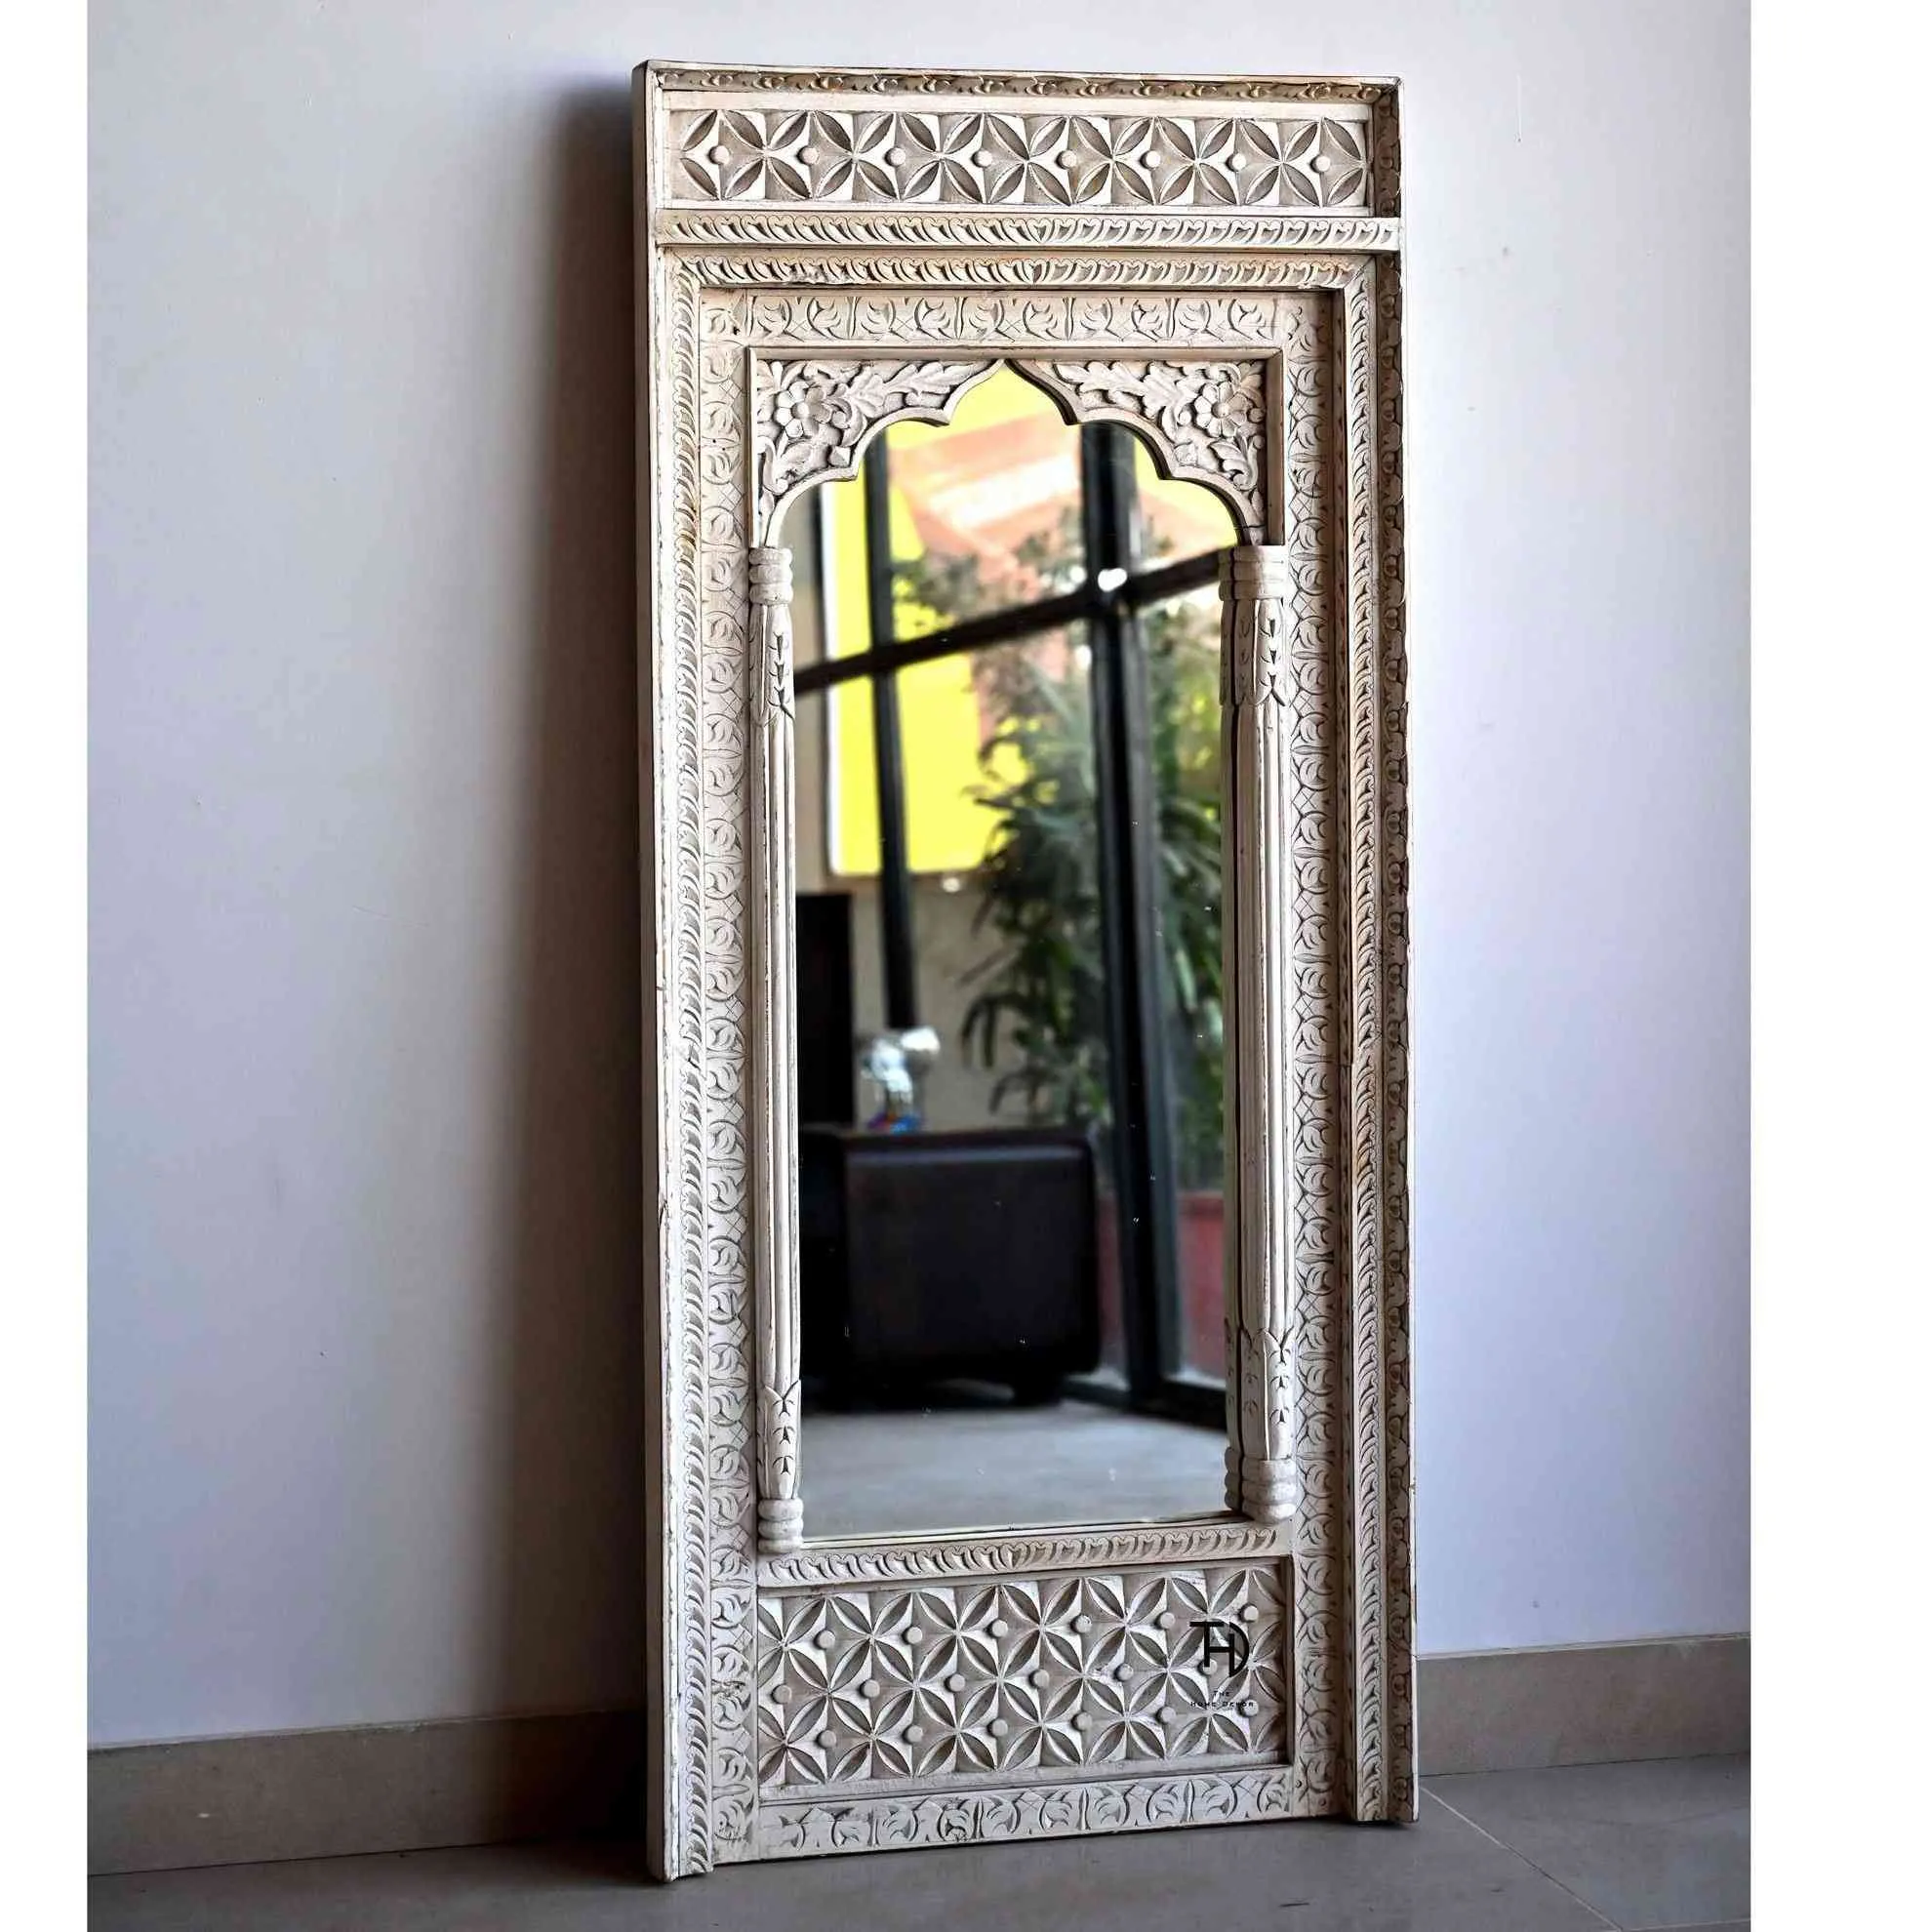 floor mirror, jharoka mirror frame, handmade frame intricated with detailing and craftsmanship